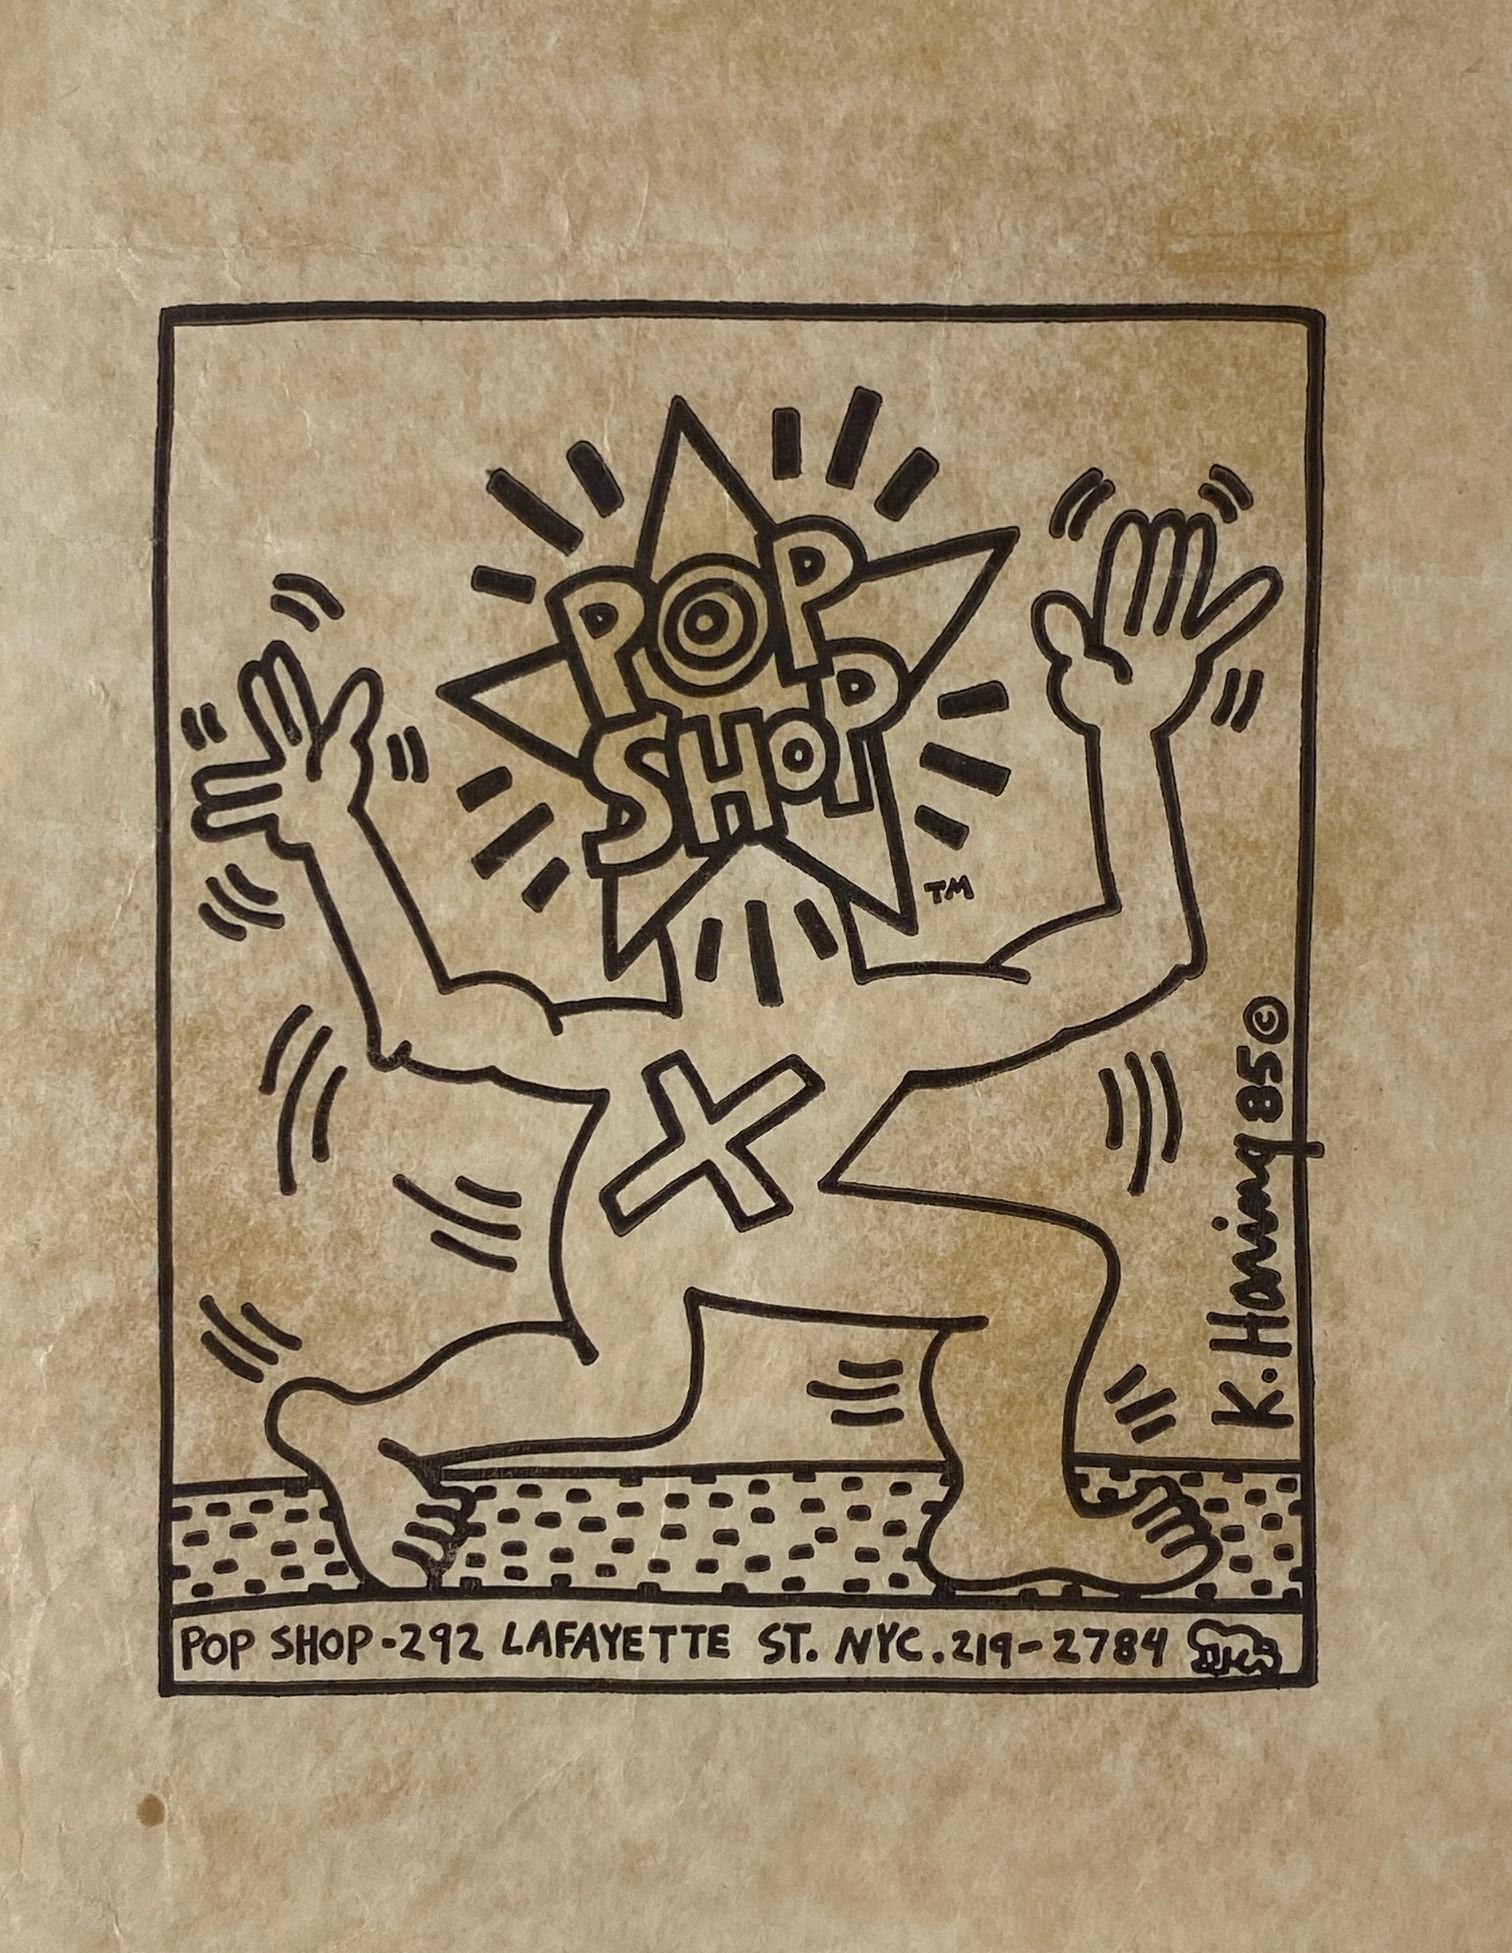 Keith Haring Original New York City Pop Shop Lithograph Bag With Bonus, 1980s For Sale 3